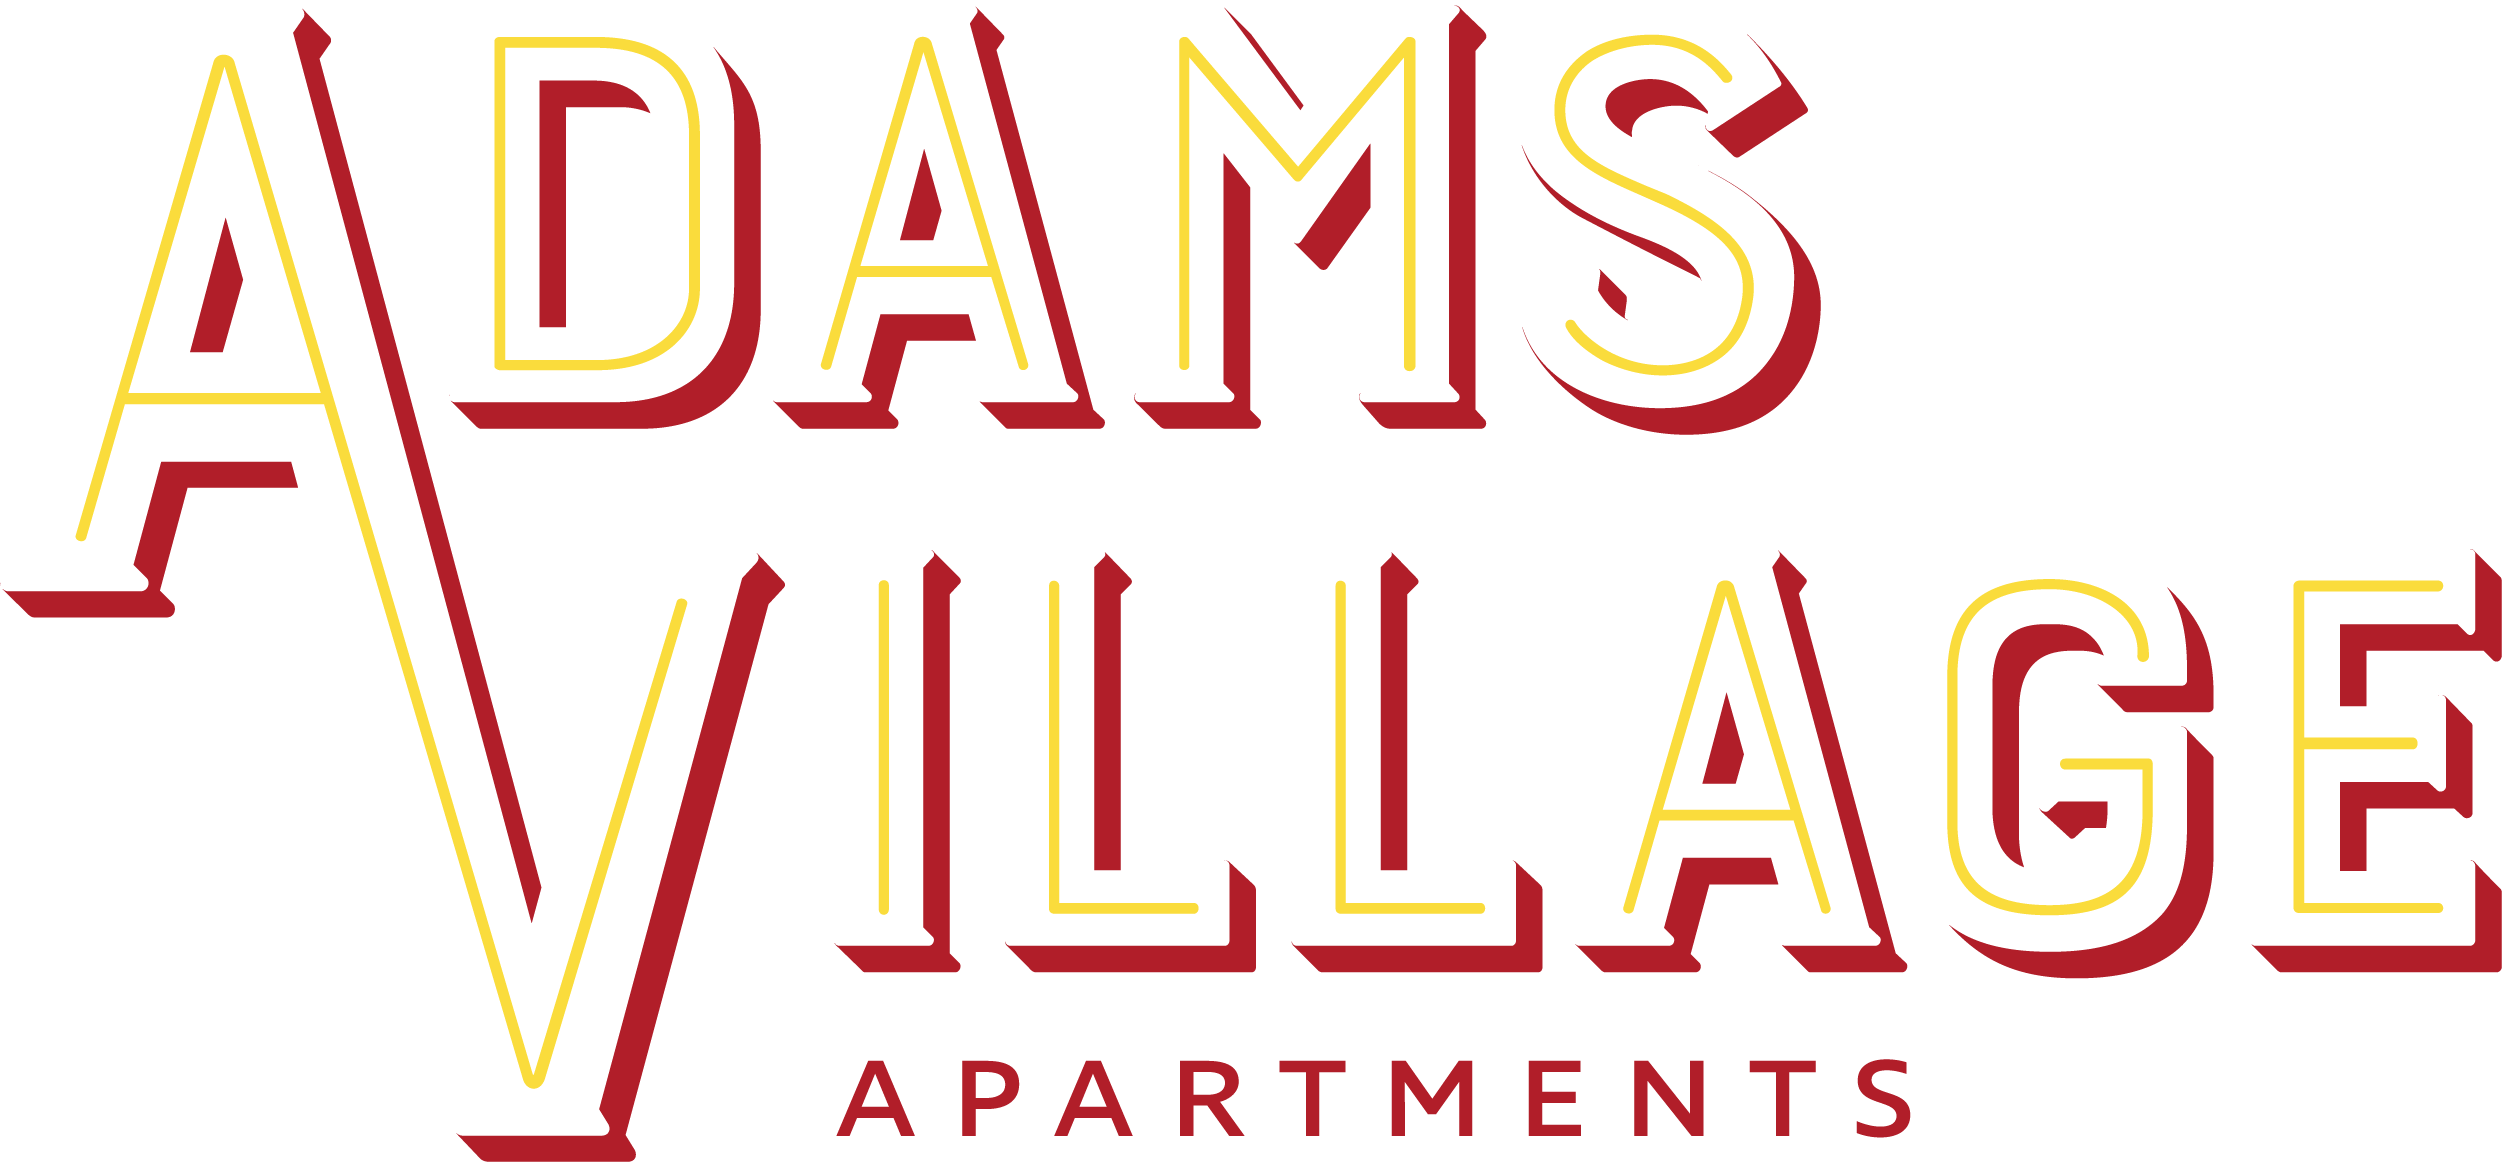 Regency - Adams Village Apartments - Branding